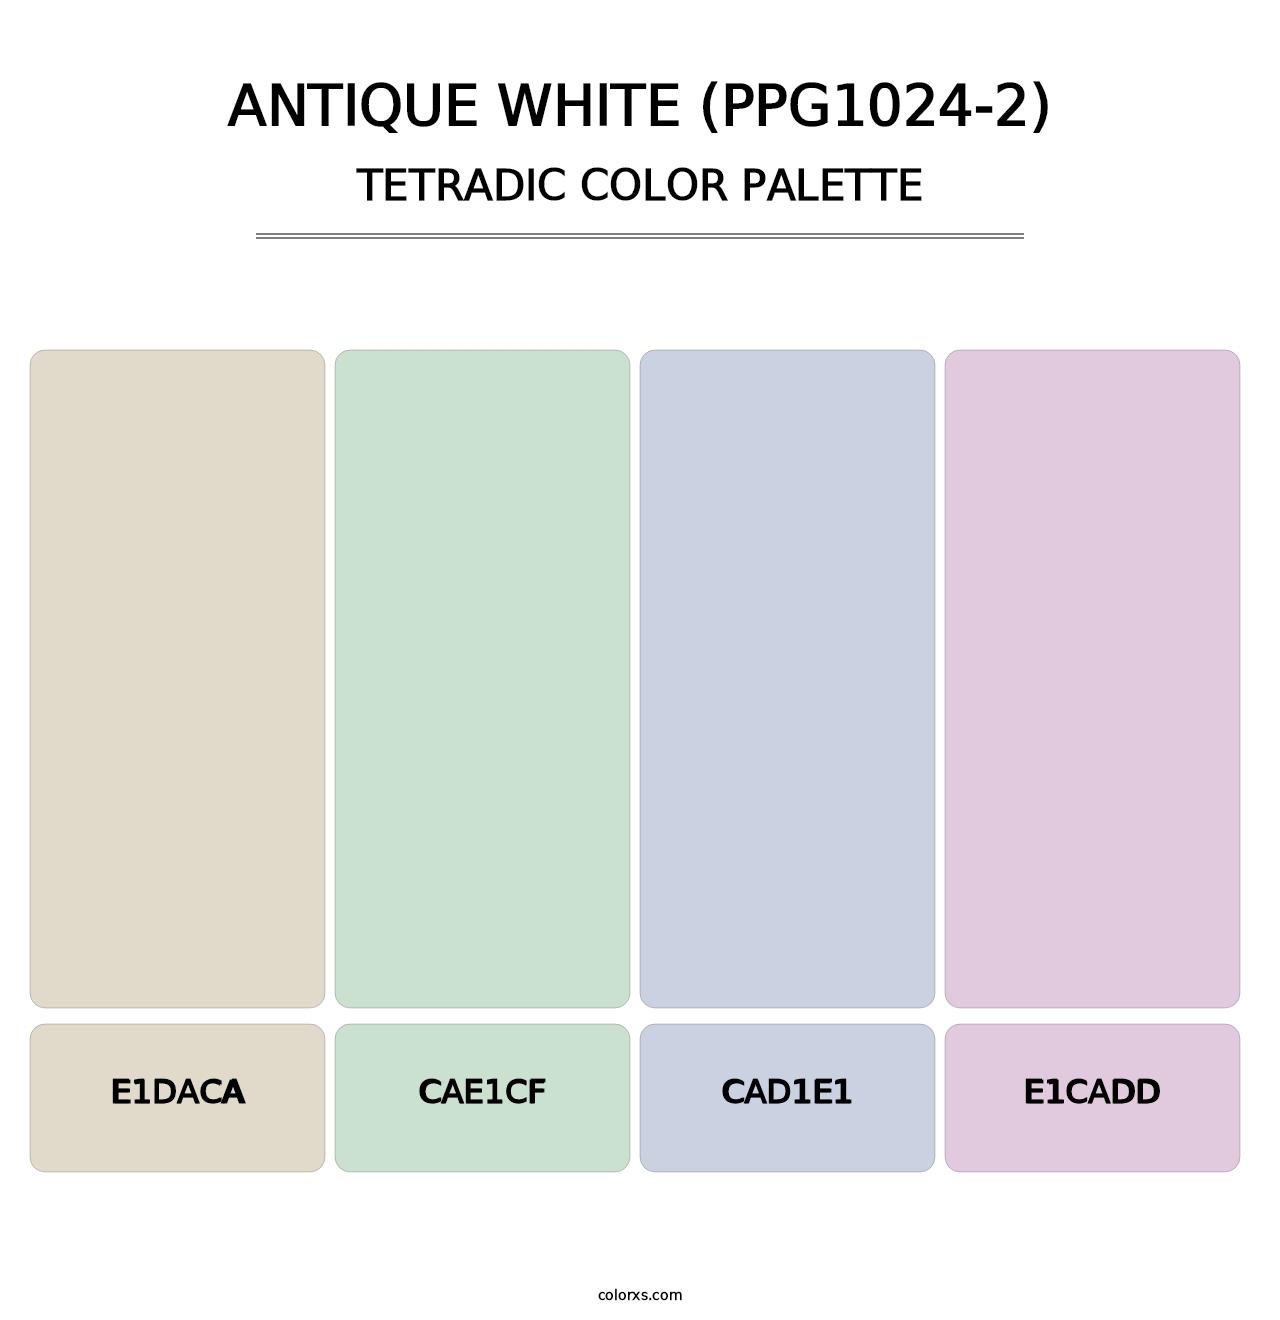 Antique White (PPG1024-2) - Tetradic Color Palette